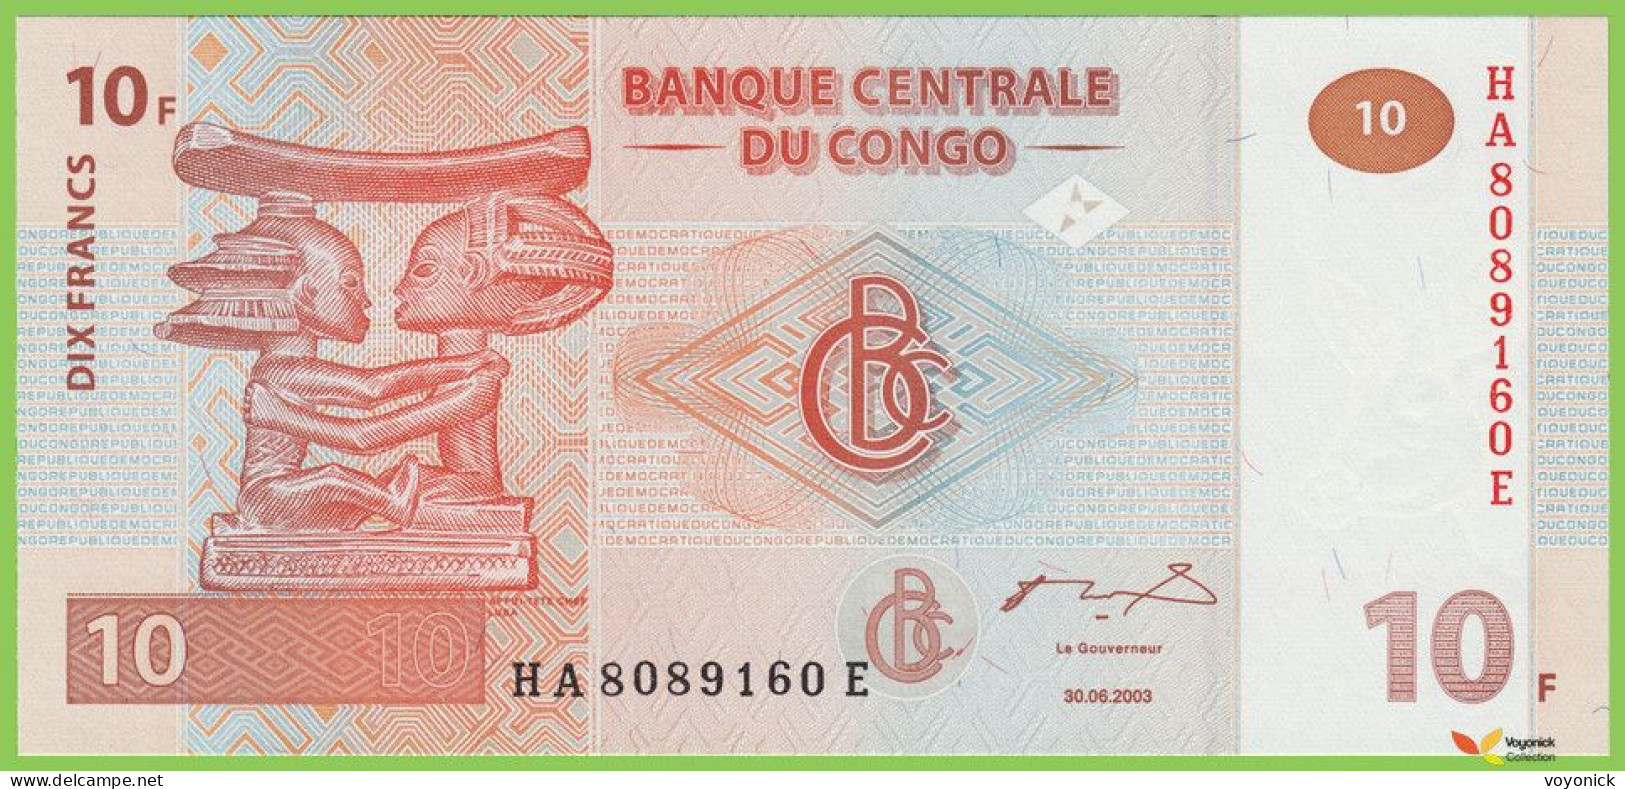 Voyo CONGO 10 Francs 2003 P93a B312 HA-E UNC - Republik Kongo (Kongo-Brazzaville)